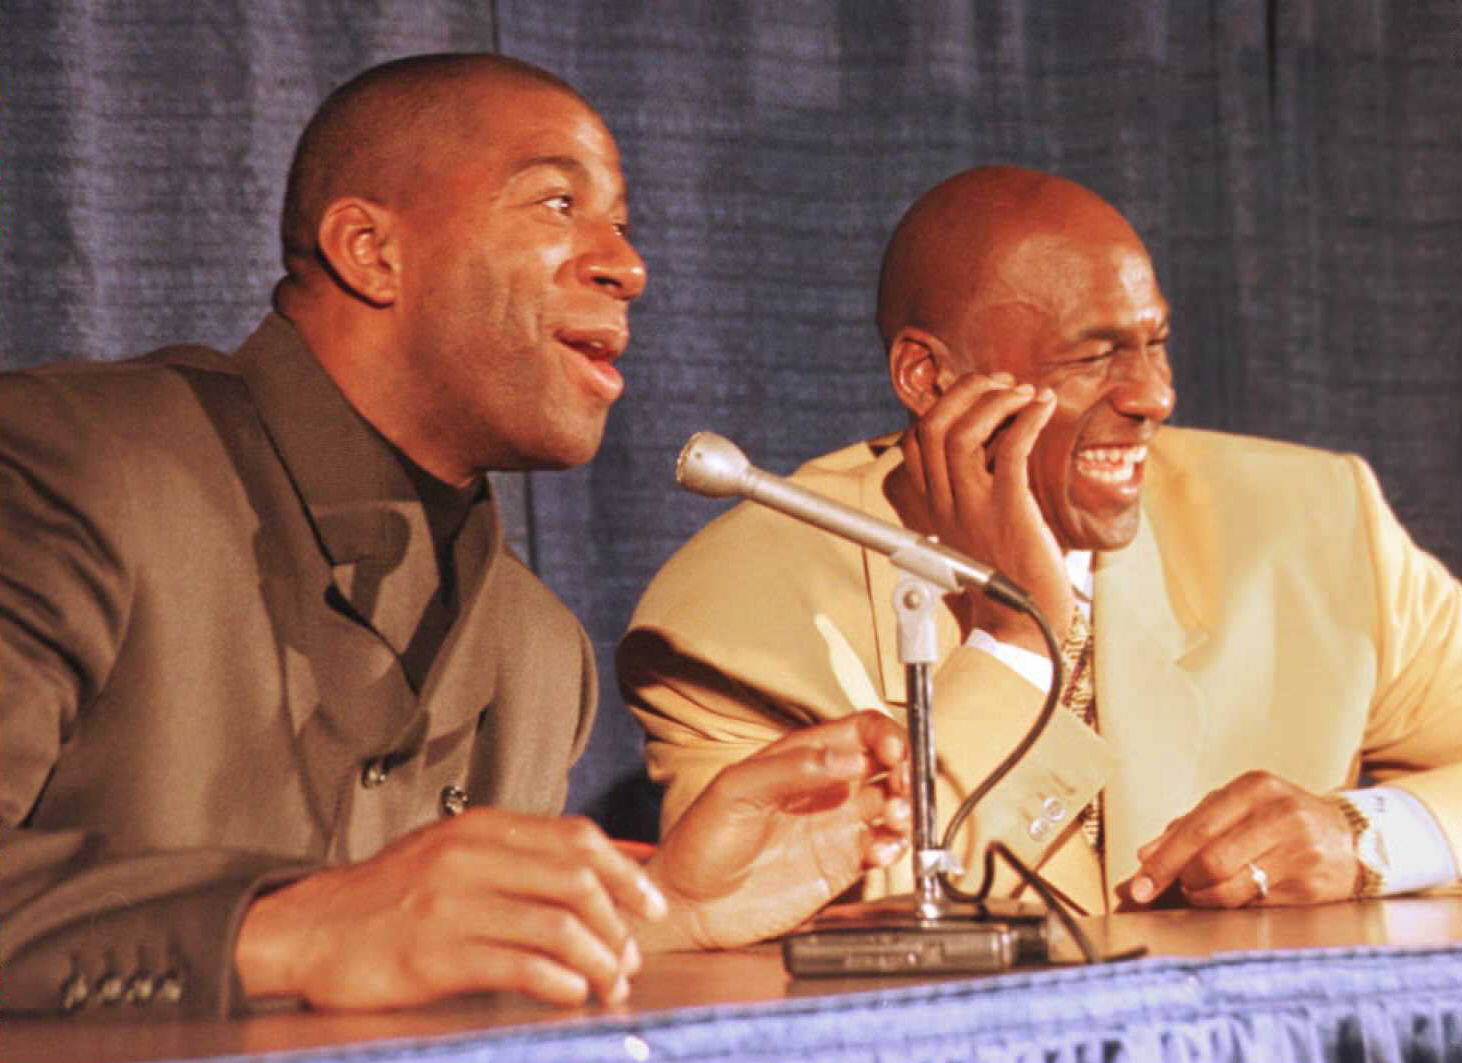 Lakers great Magic Johnson and Bulls legend Michael Jordan speak during a press conference in 1996